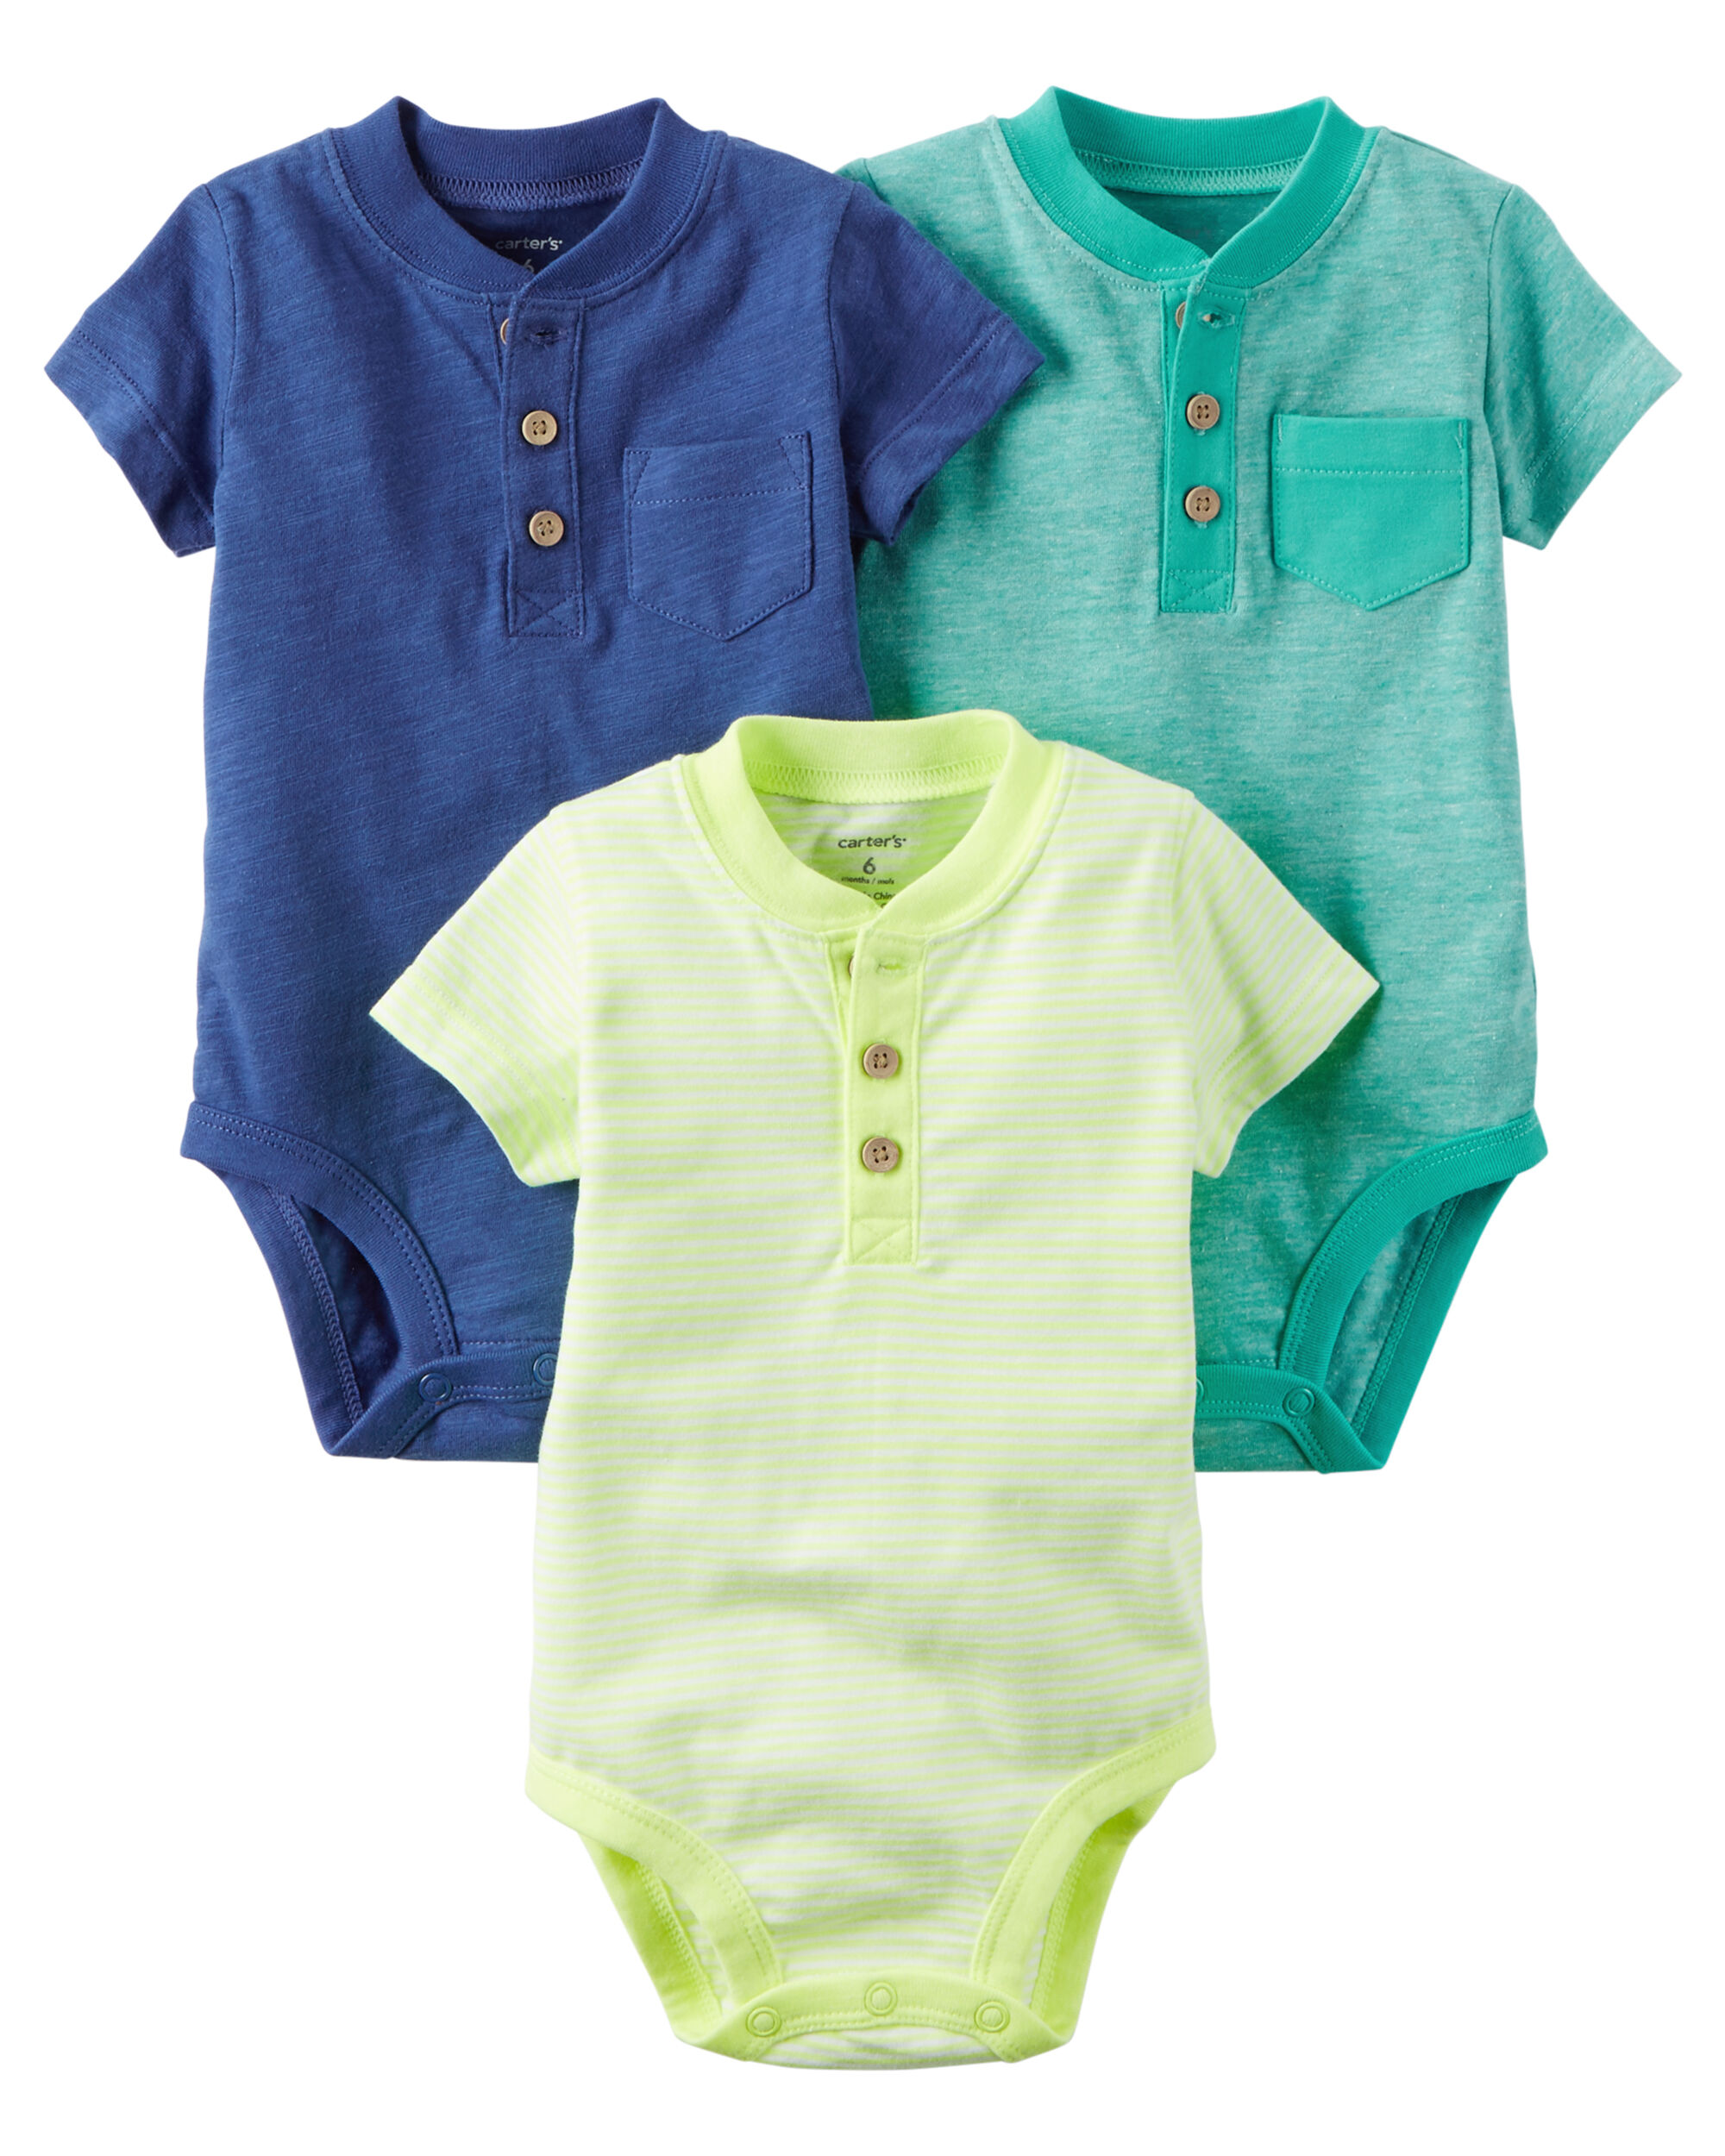 neon baby boy clothes